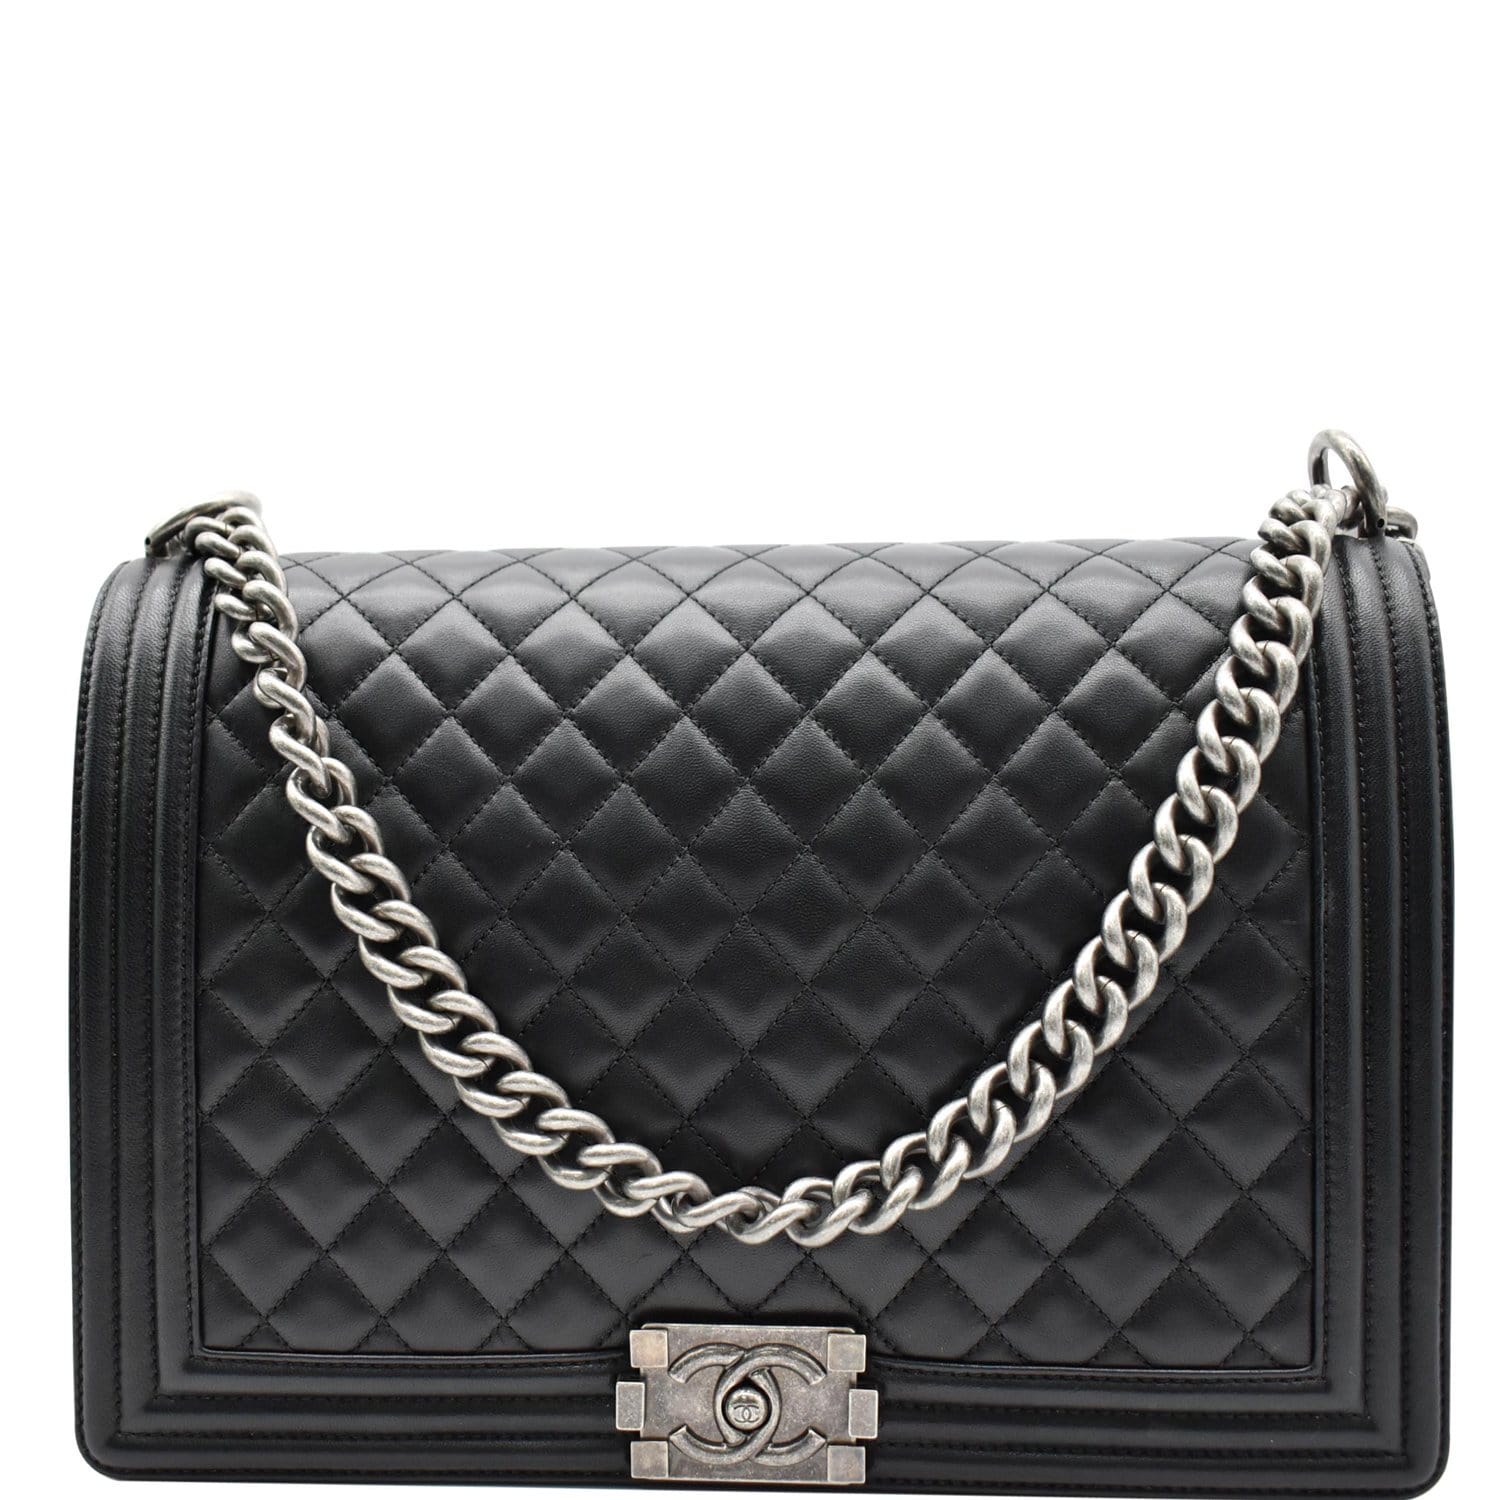 Black Chanel Bag Black Chain - 895 For Sale on 1stDibs